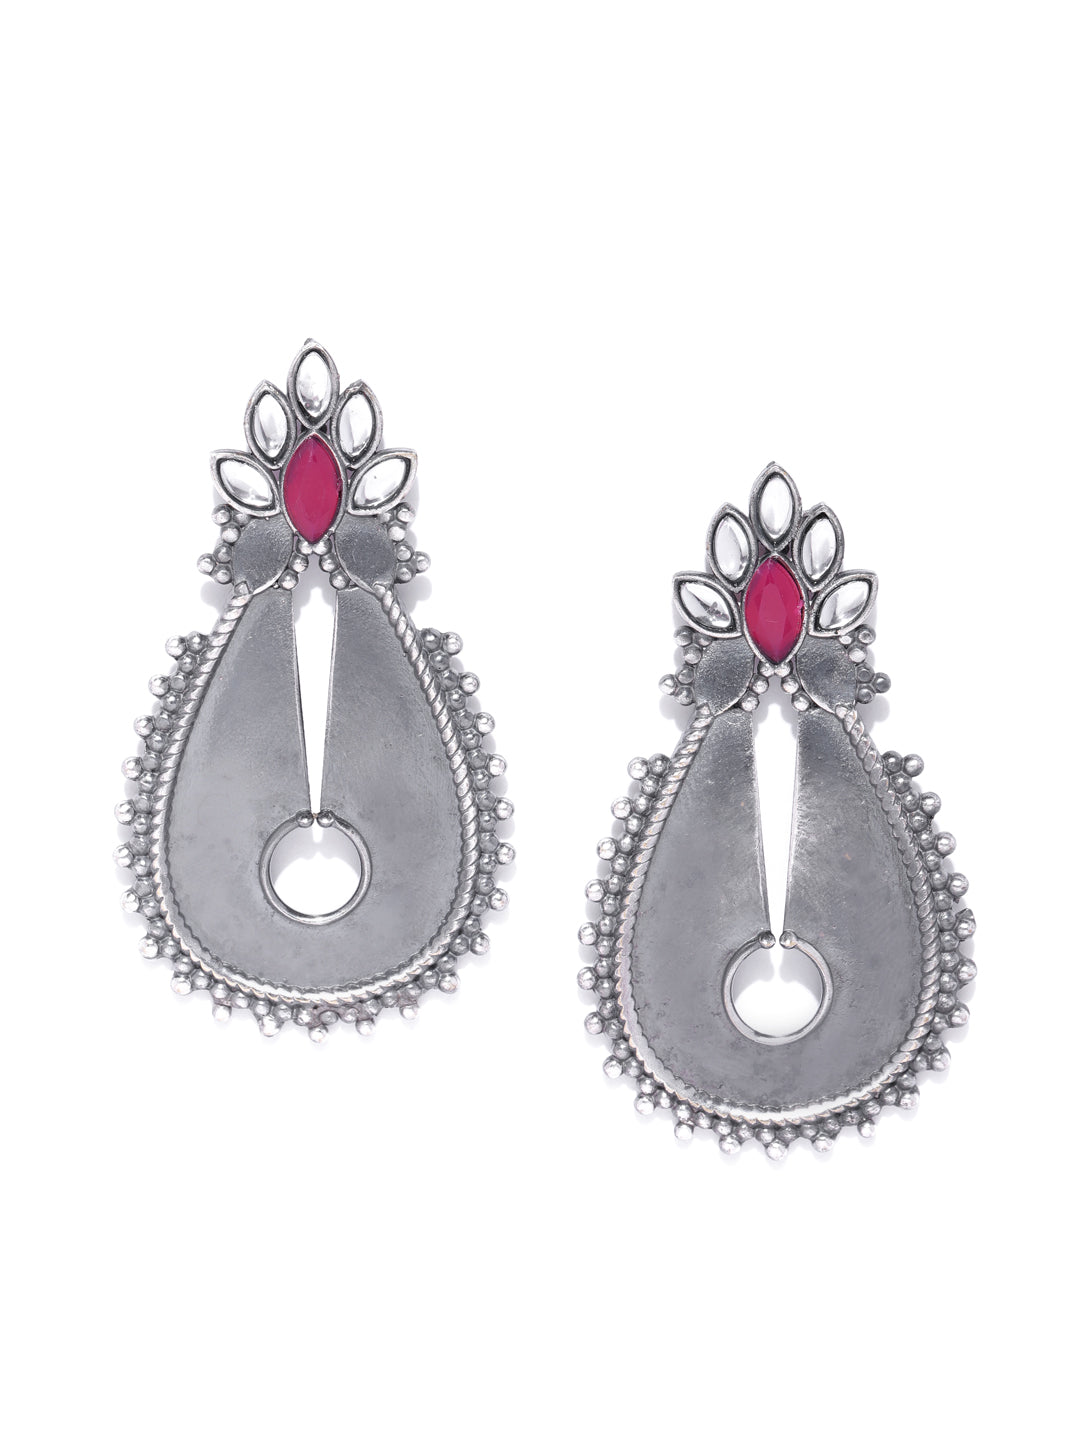 Oxidised Silver-Plated Kundan and Ruby Studded Teardrop Shaped Earrings